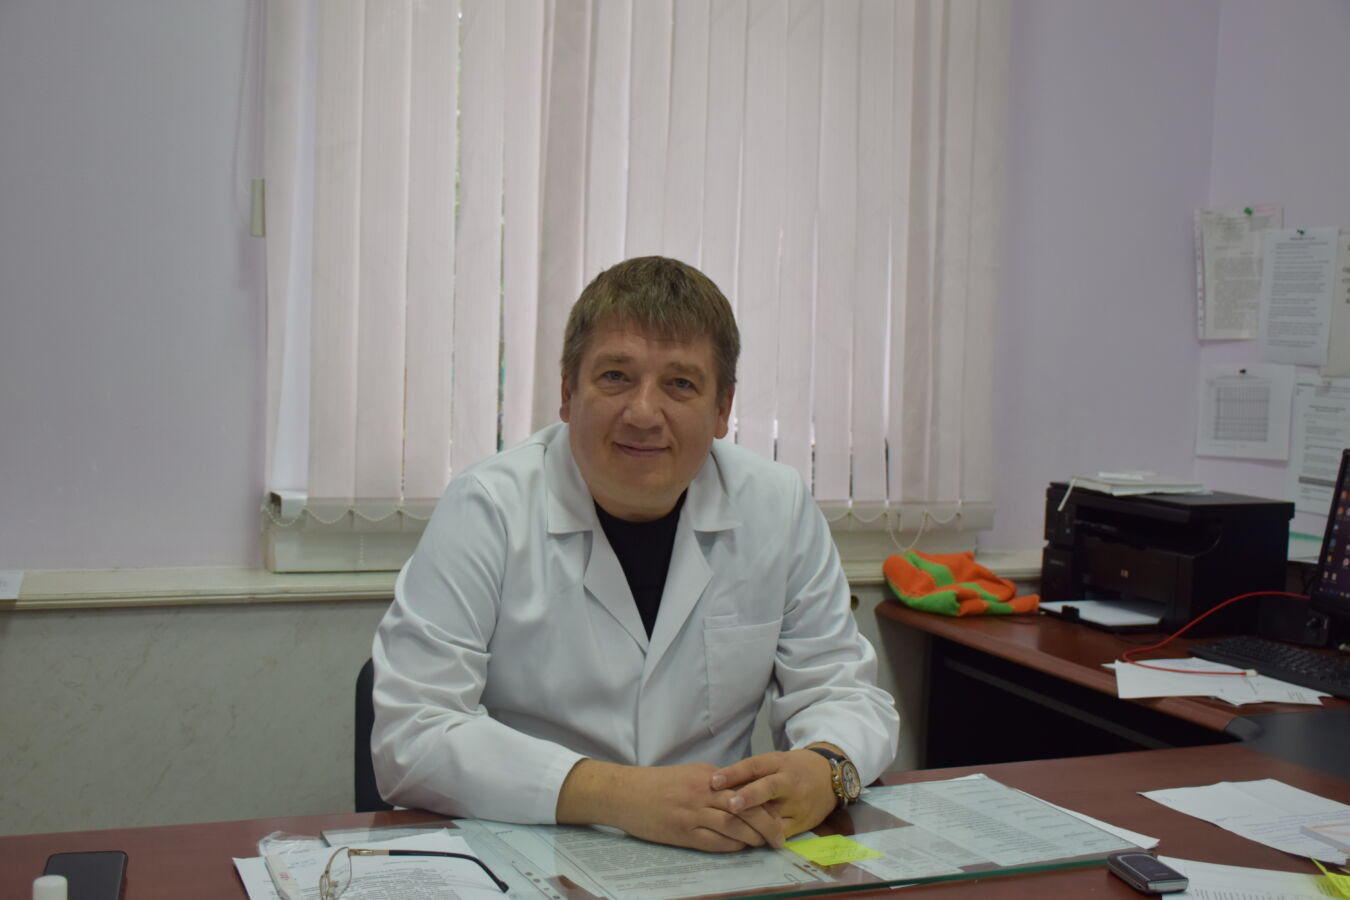 Захарченко Юрий Александрович Краснодар психиатрическая